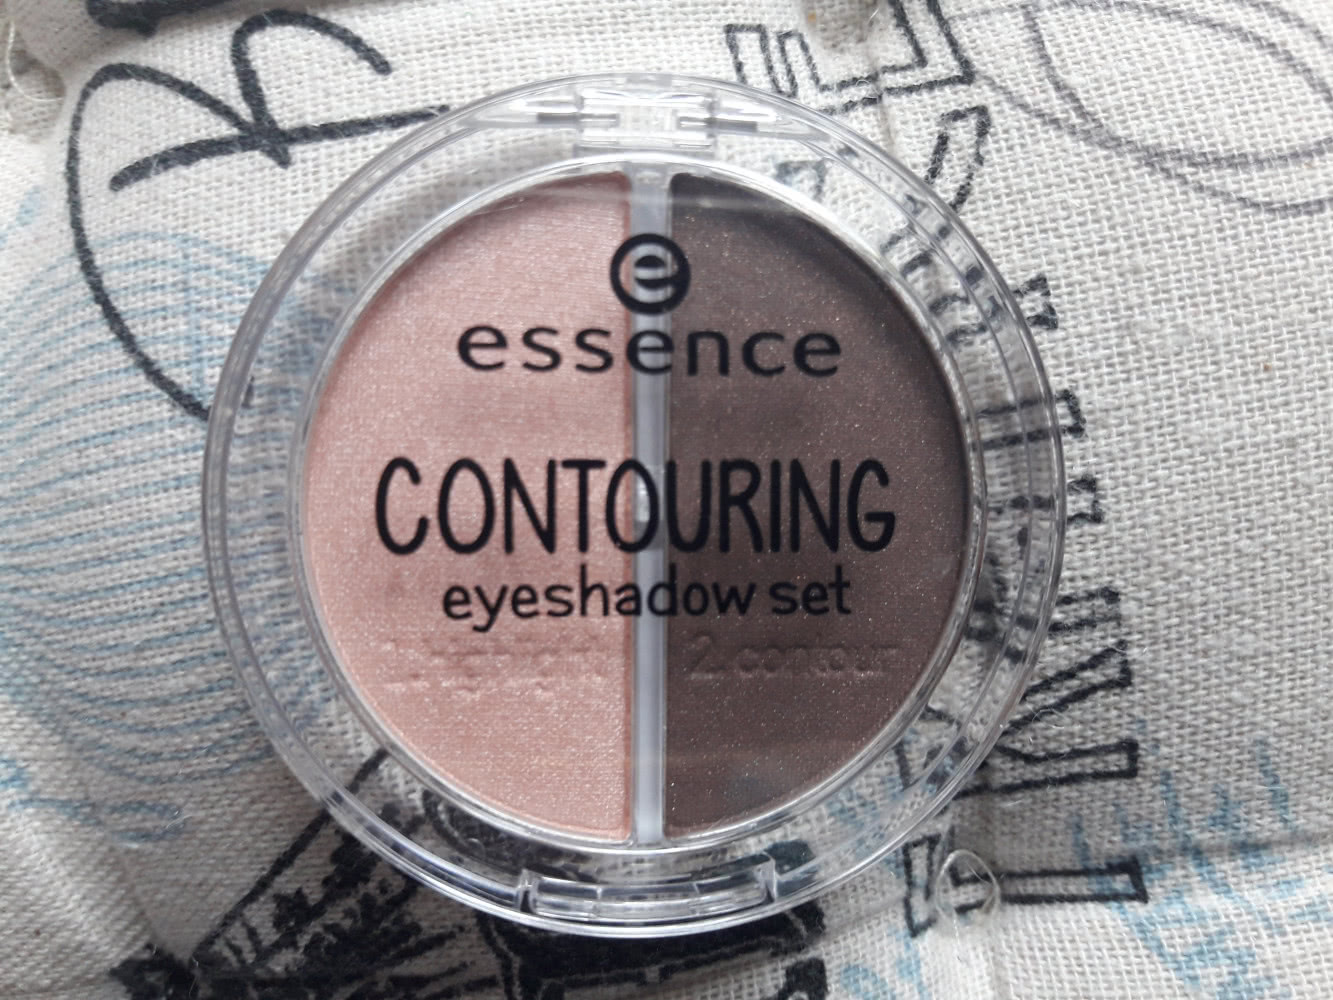 Essence contouring eyeshadow set